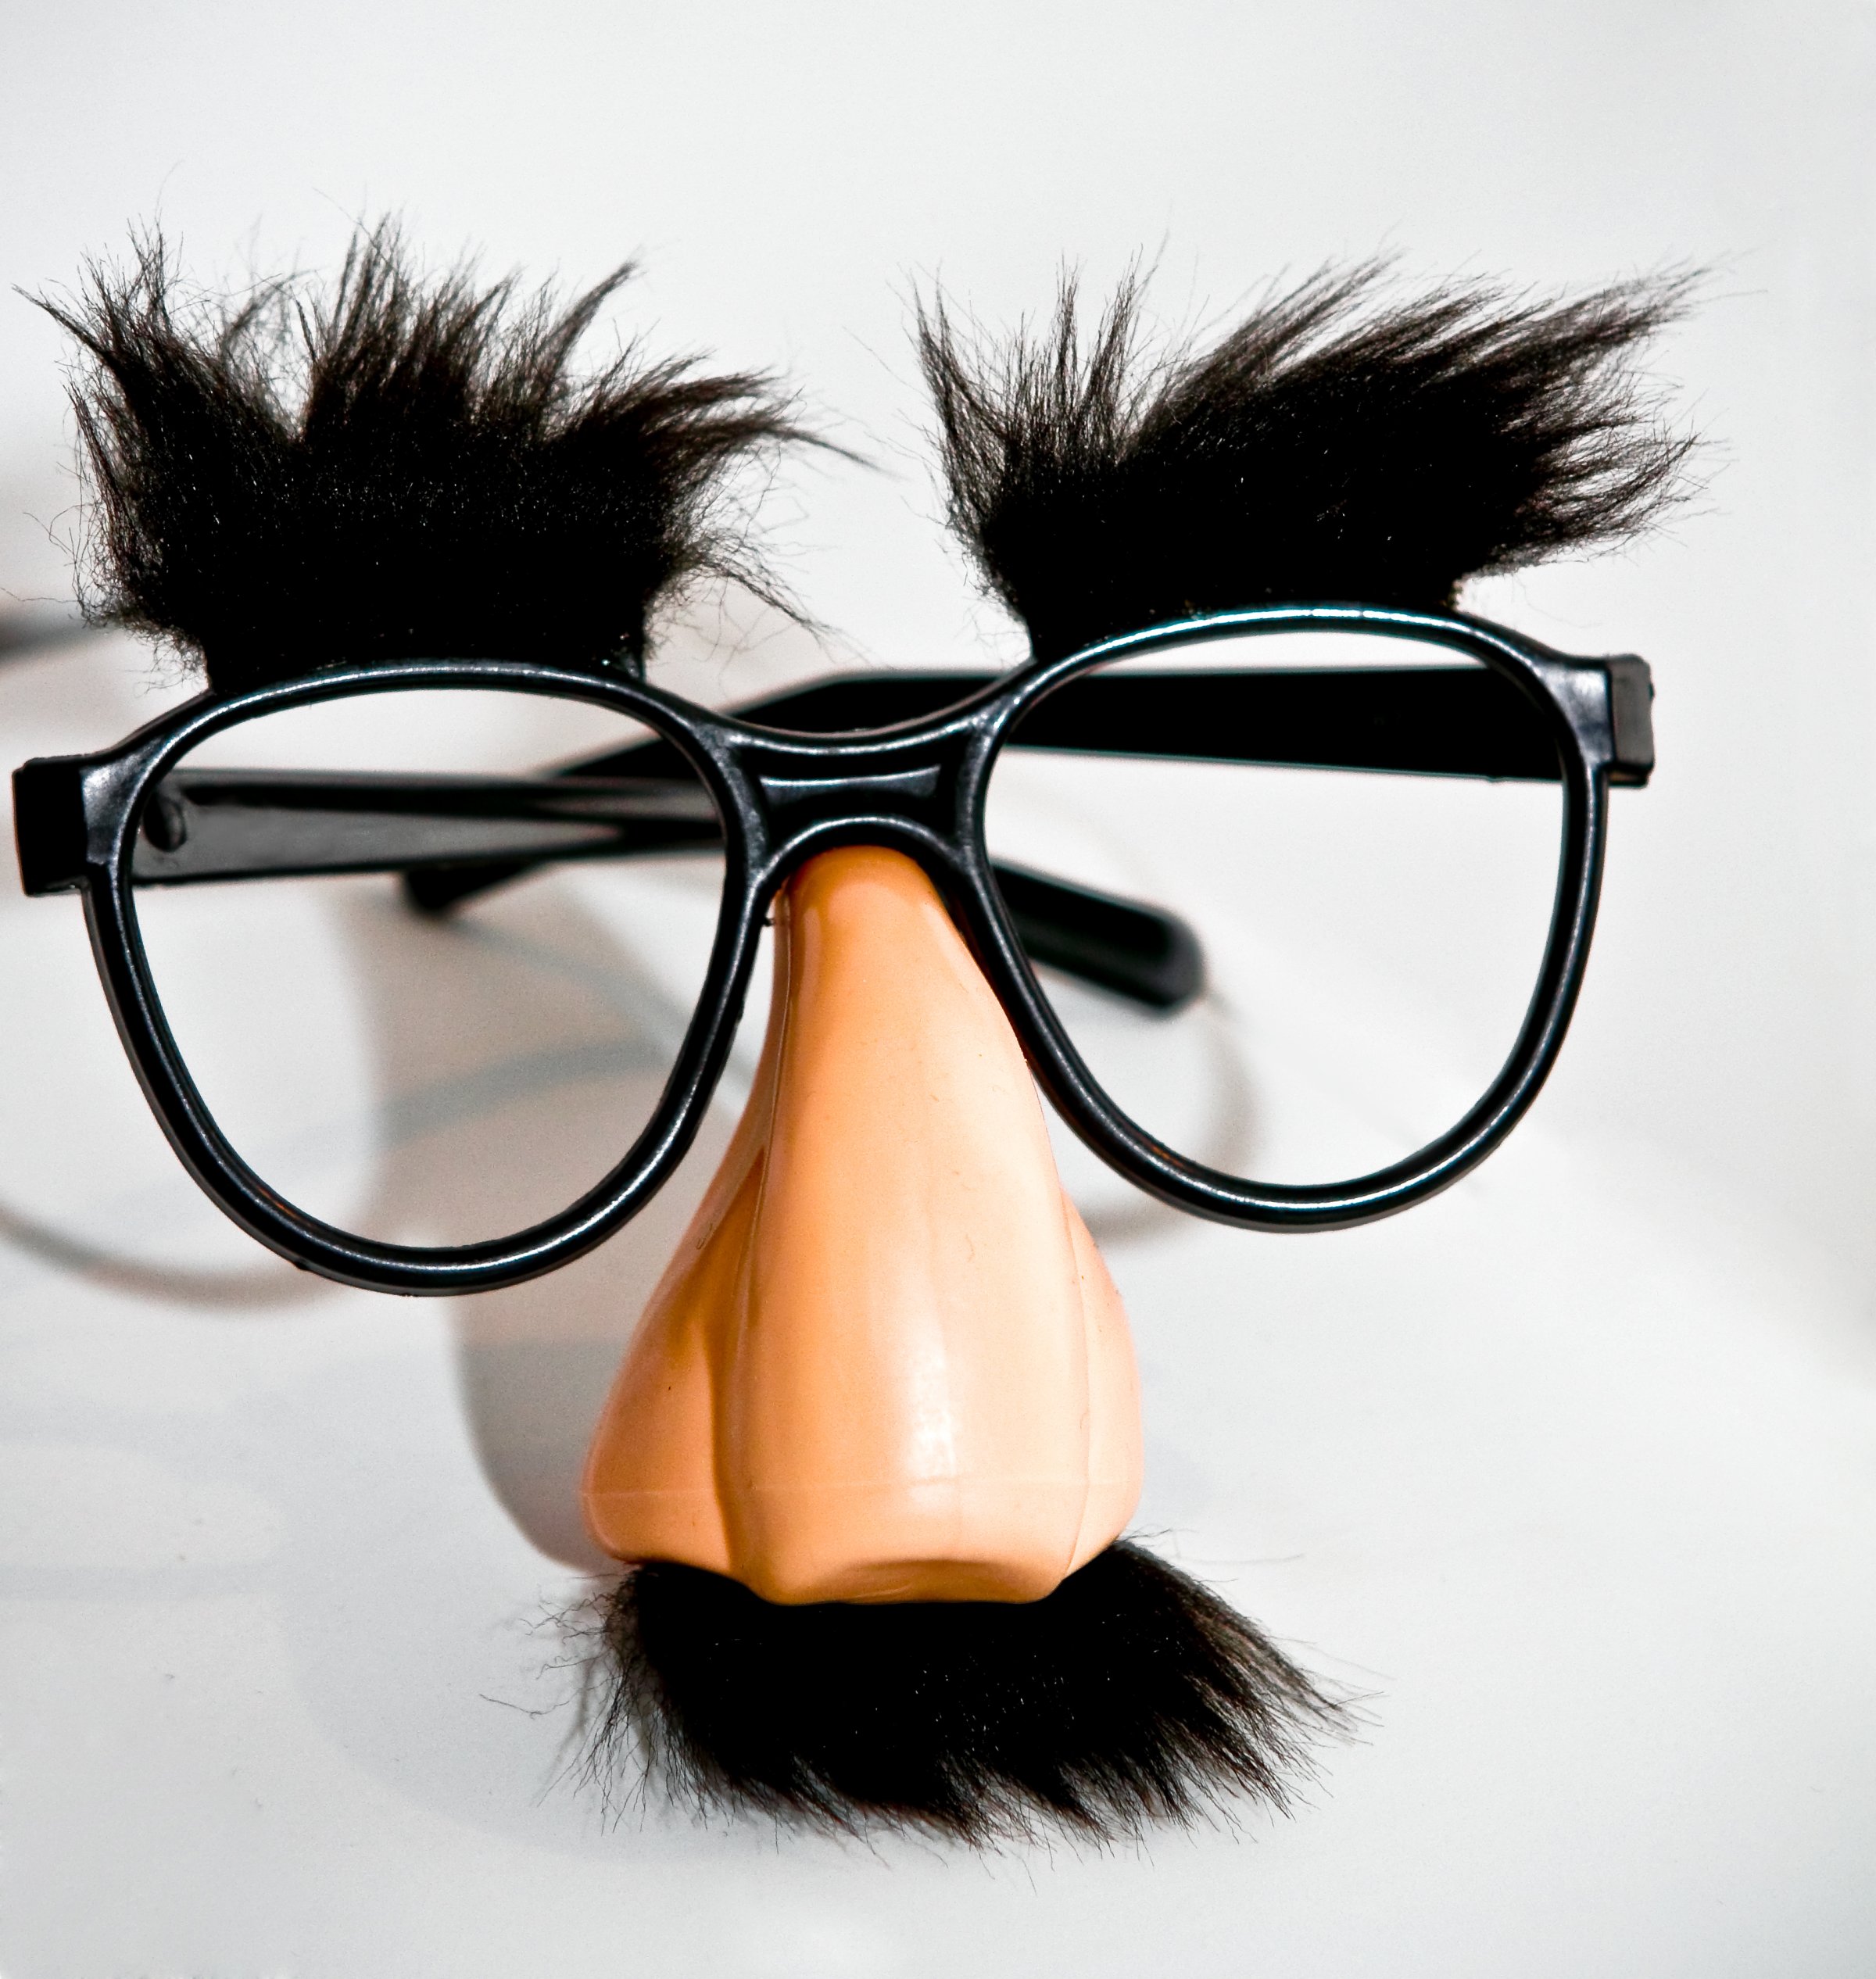 Groucho marx glasses